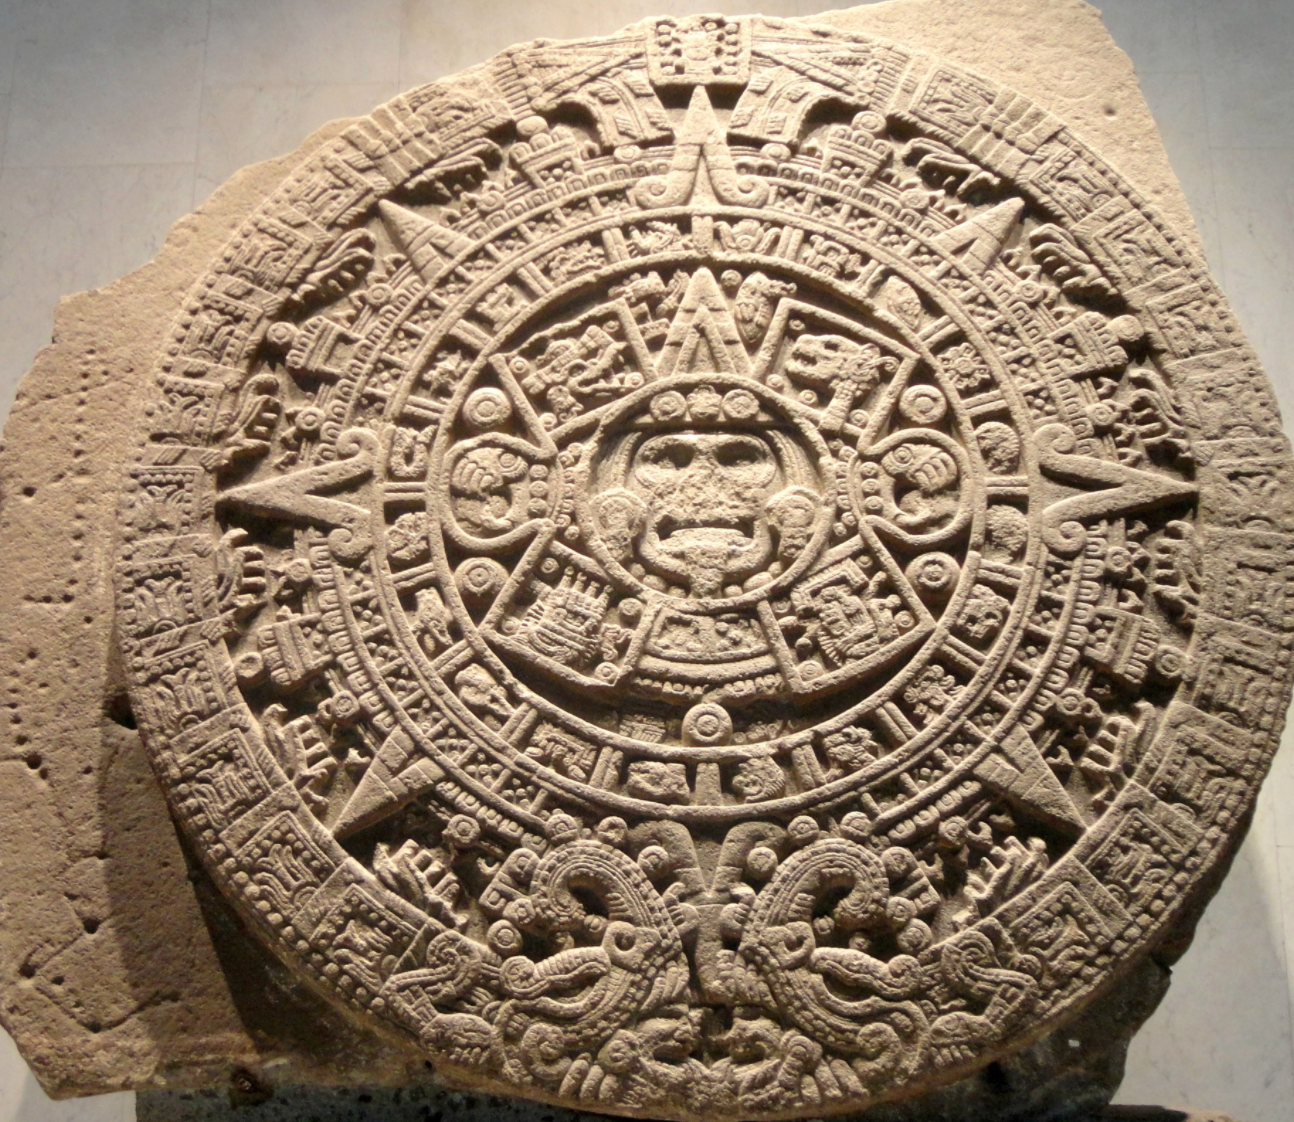 The Aztec Calendar Stone, 3.6 meters (12 feet) in diameter.